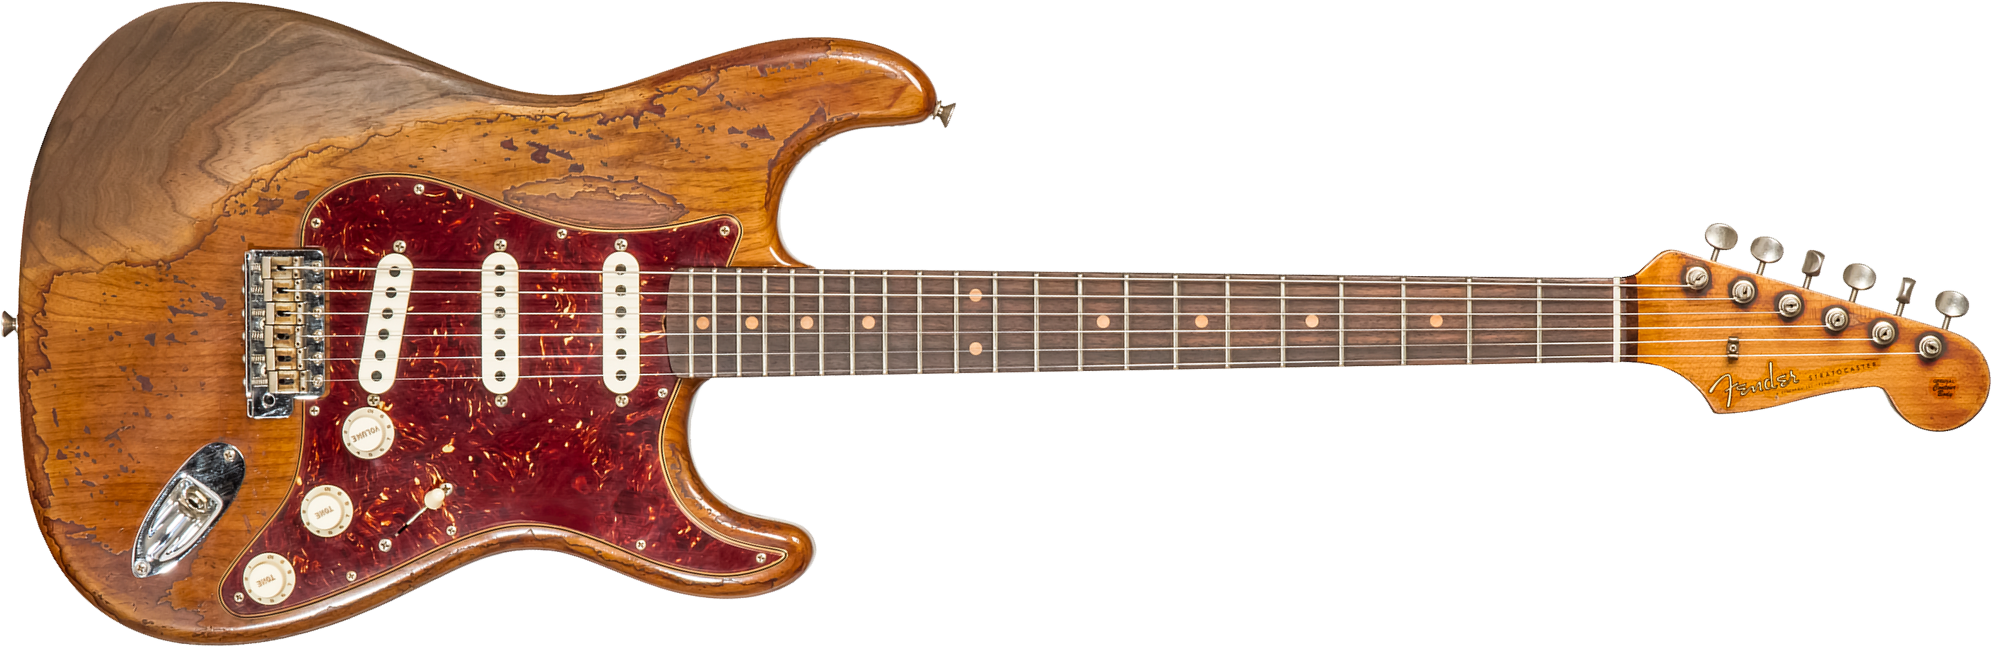 Fender Custom Shop Strat 1961 3s Trem Rw #cz570051 - Super Heavy Relic Natural - Elektrische gitaar in Str-vorm - Main picture